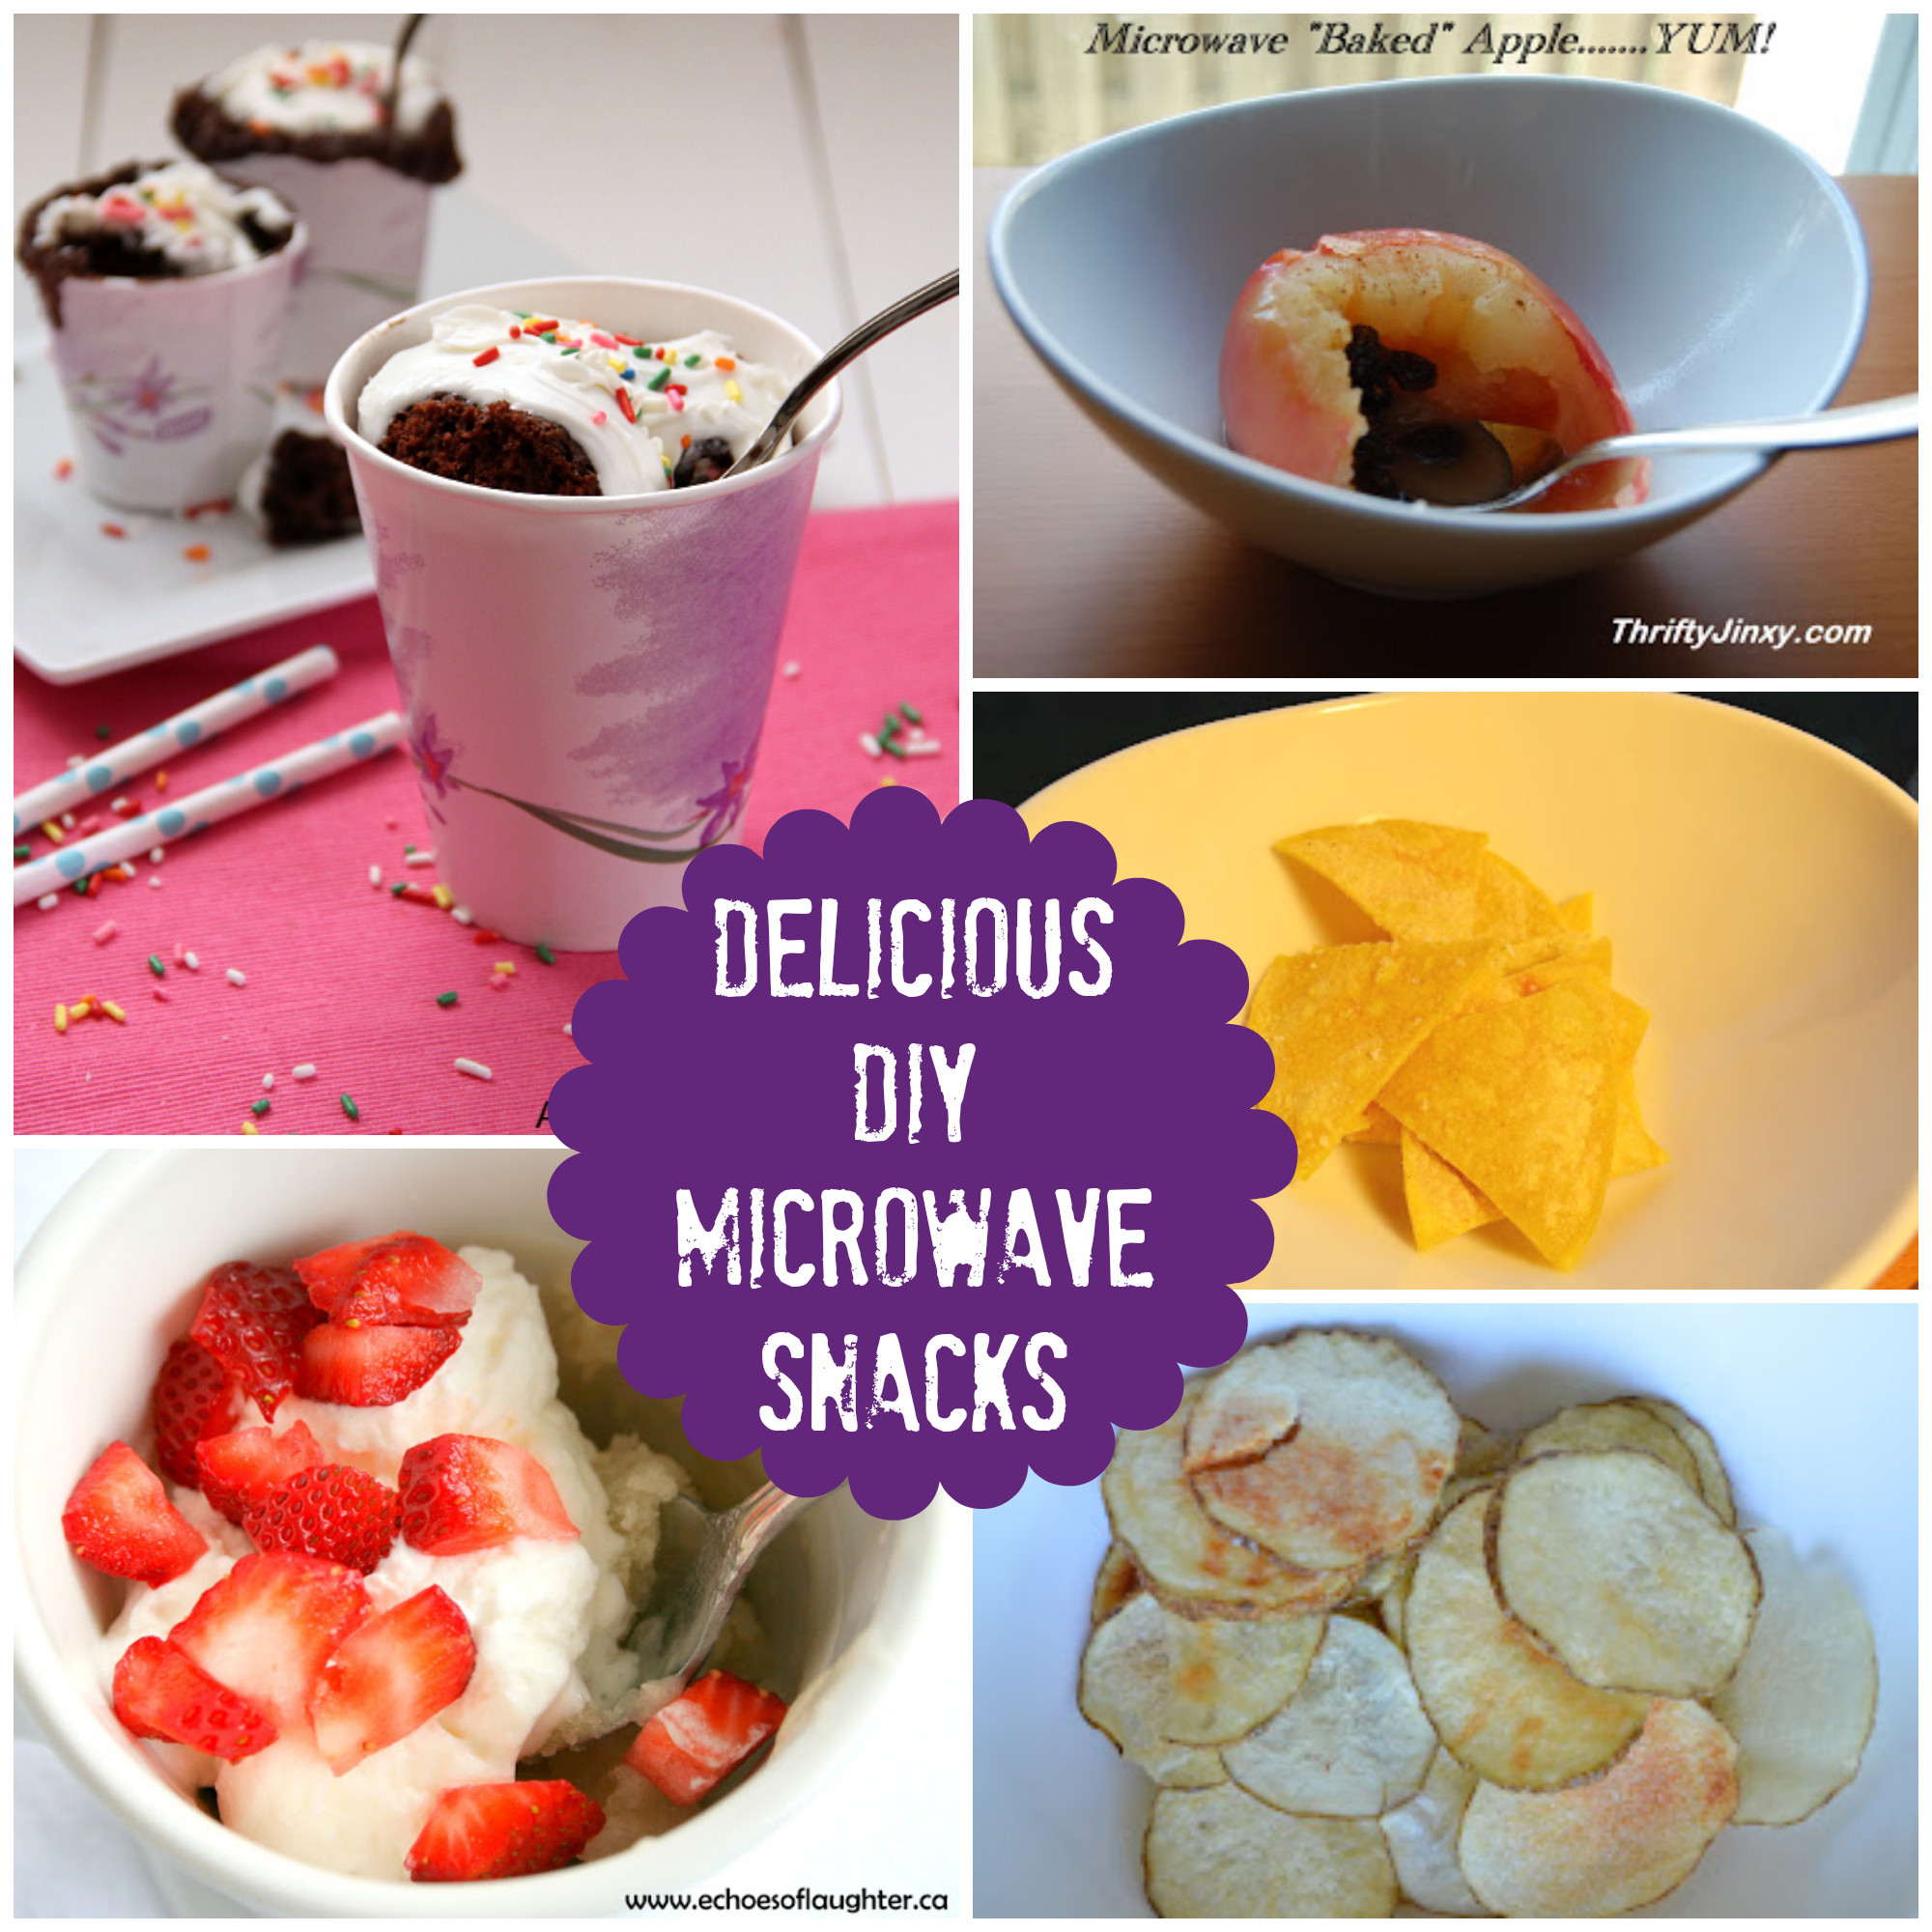 Microwave Snacks Recipes
 Delicious DIY Microwave Snack Recipes